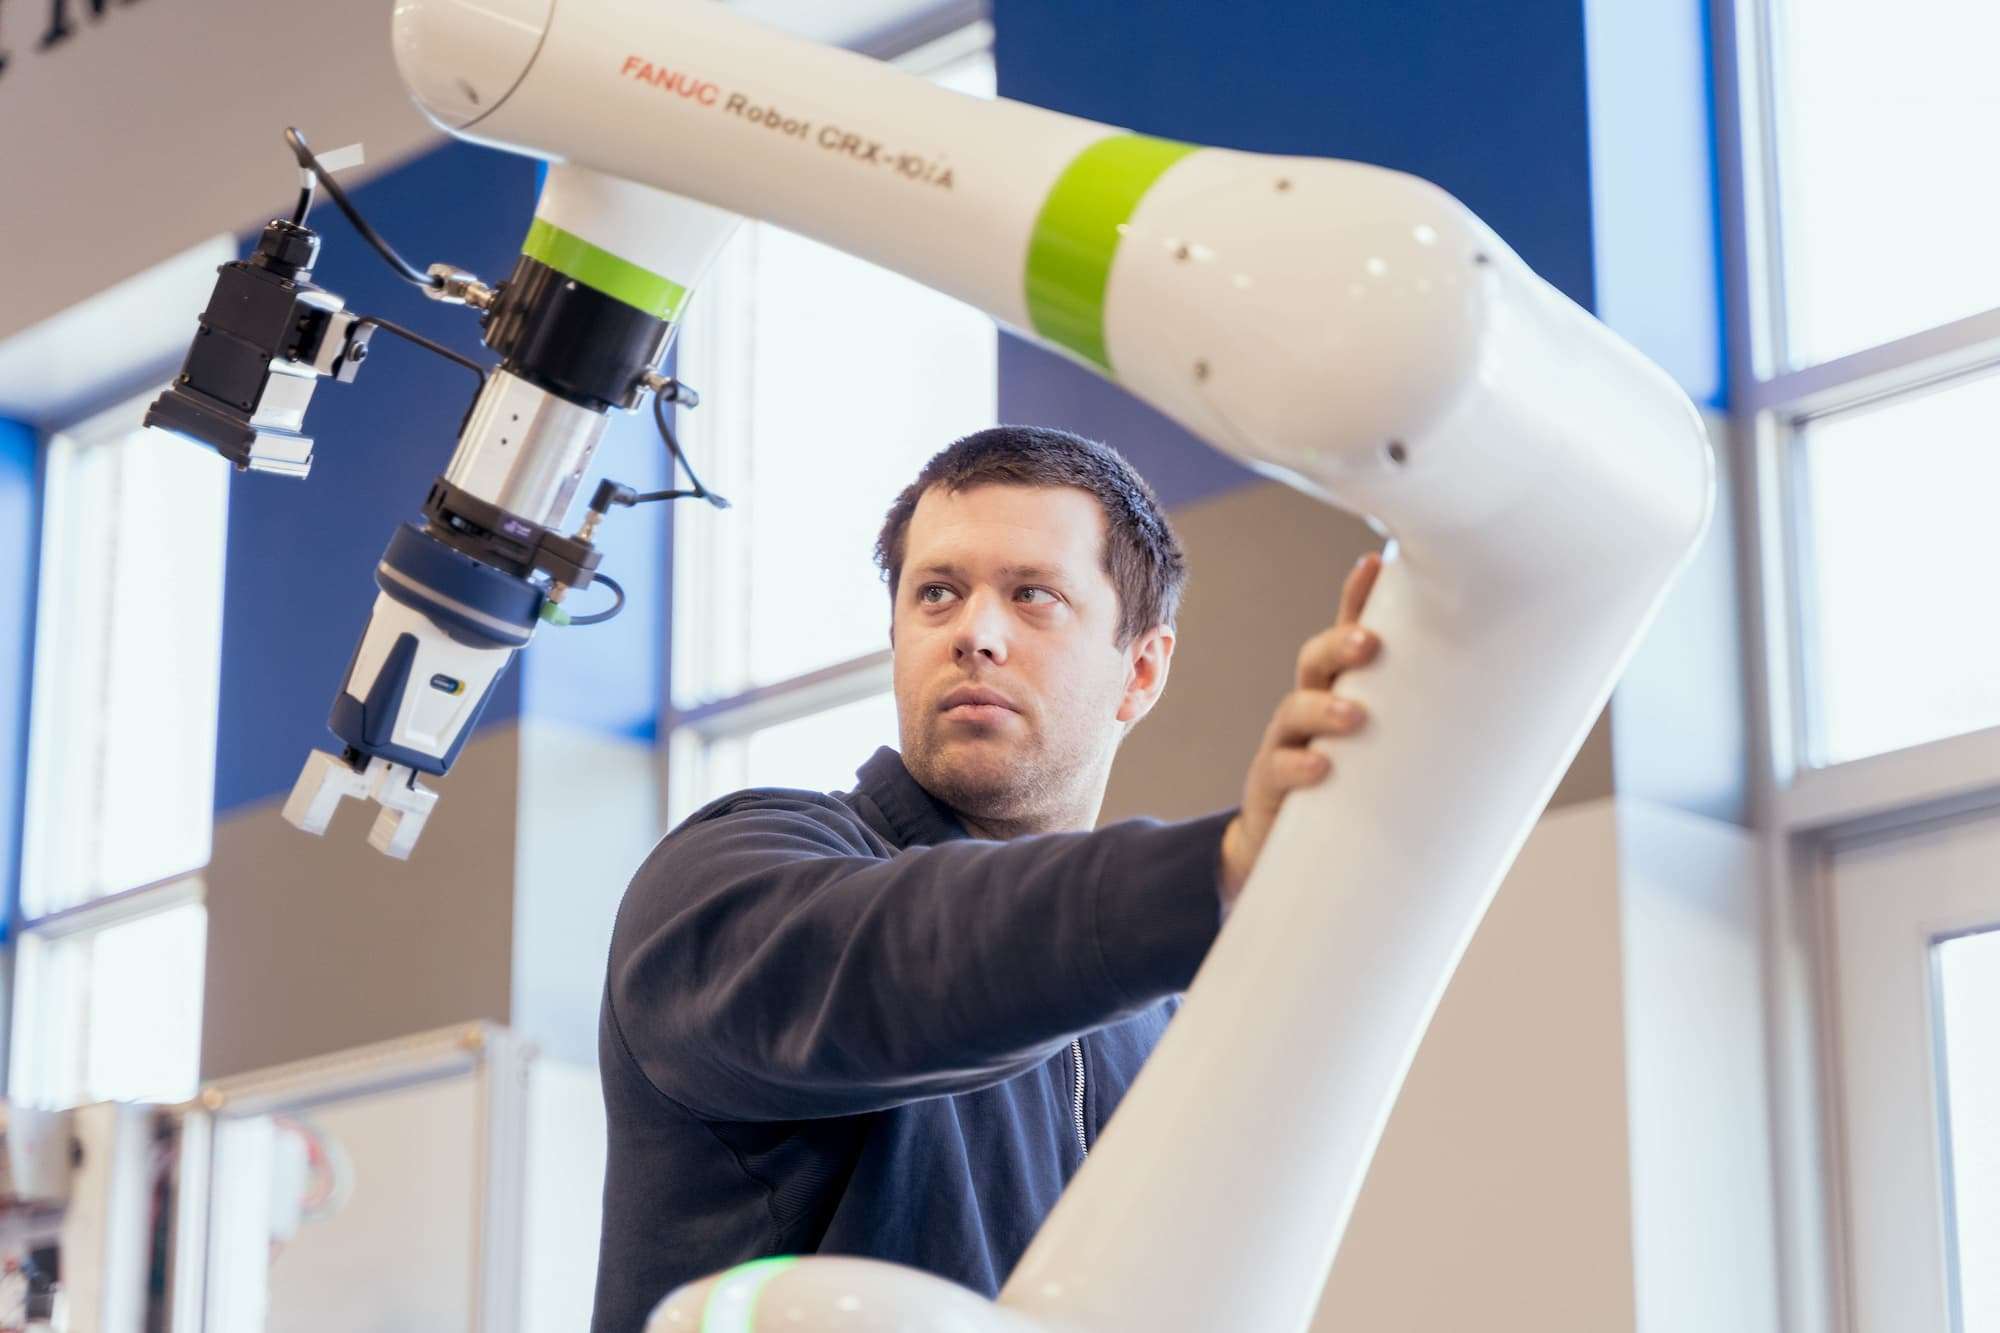 A man raises the position of a FANUC smart manufacturing robot.